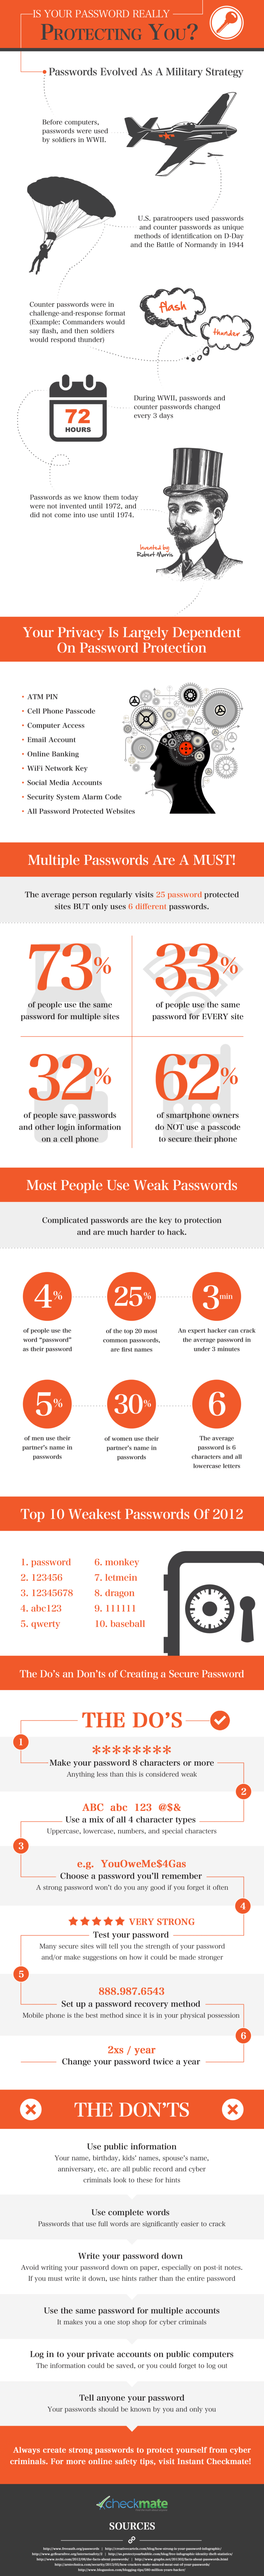 online-password-protection1